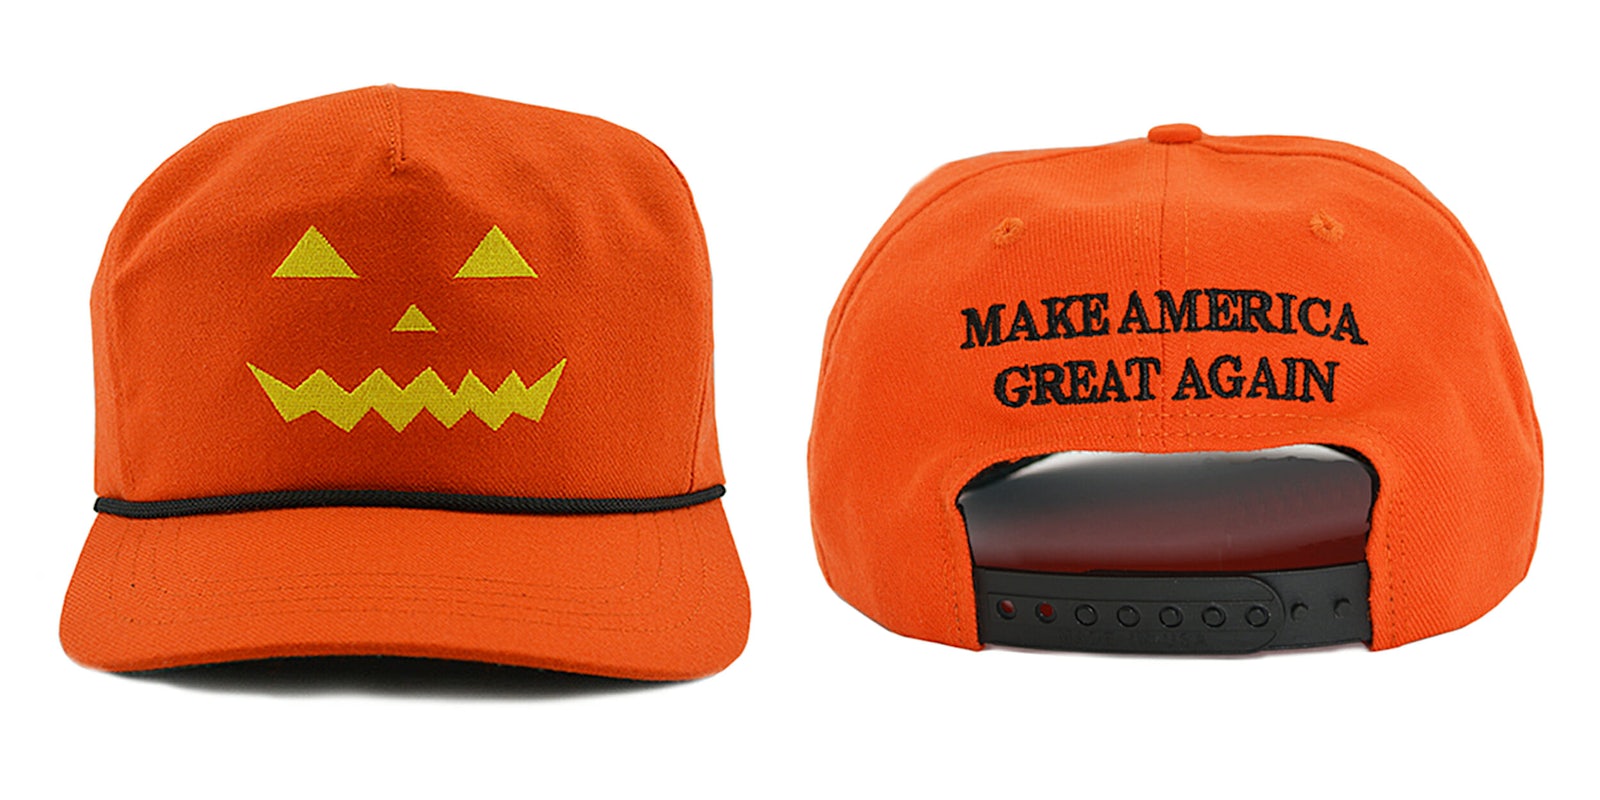 Make America Great Again halloween pumpkin hat